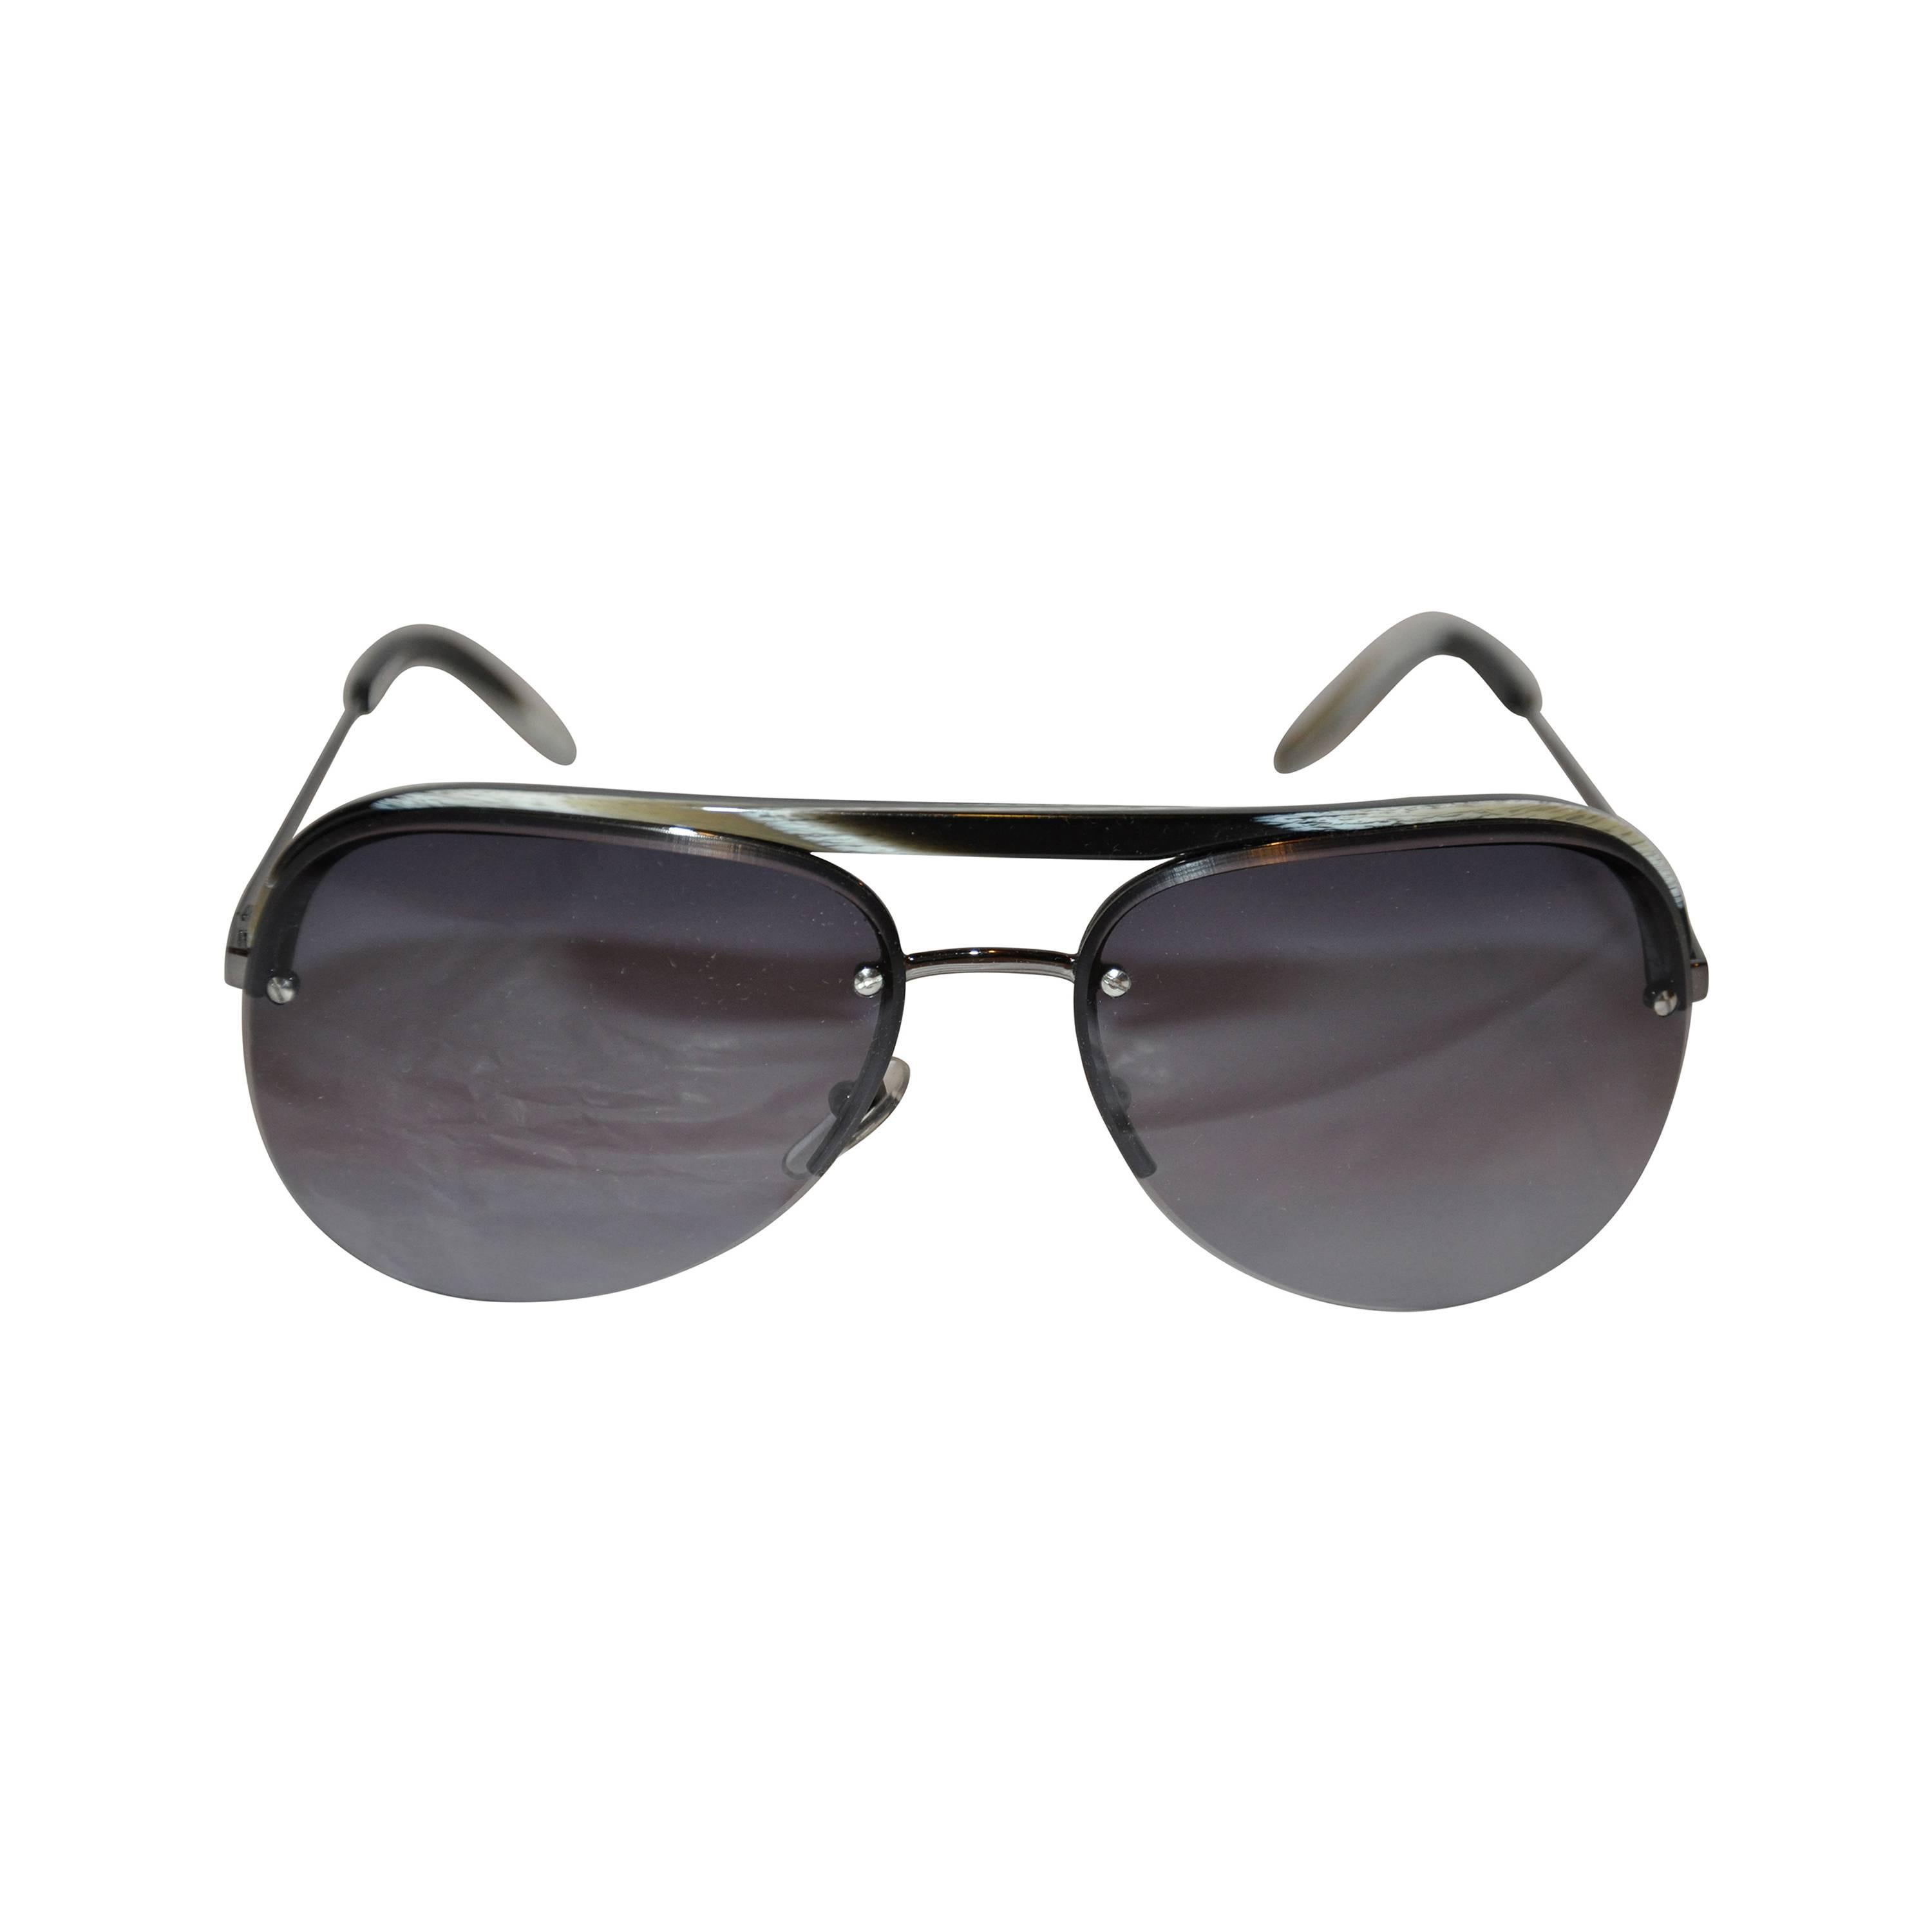 Yves Saint Laurent Black & White Horn Accent with Black Hardware Sunglasses For Sale